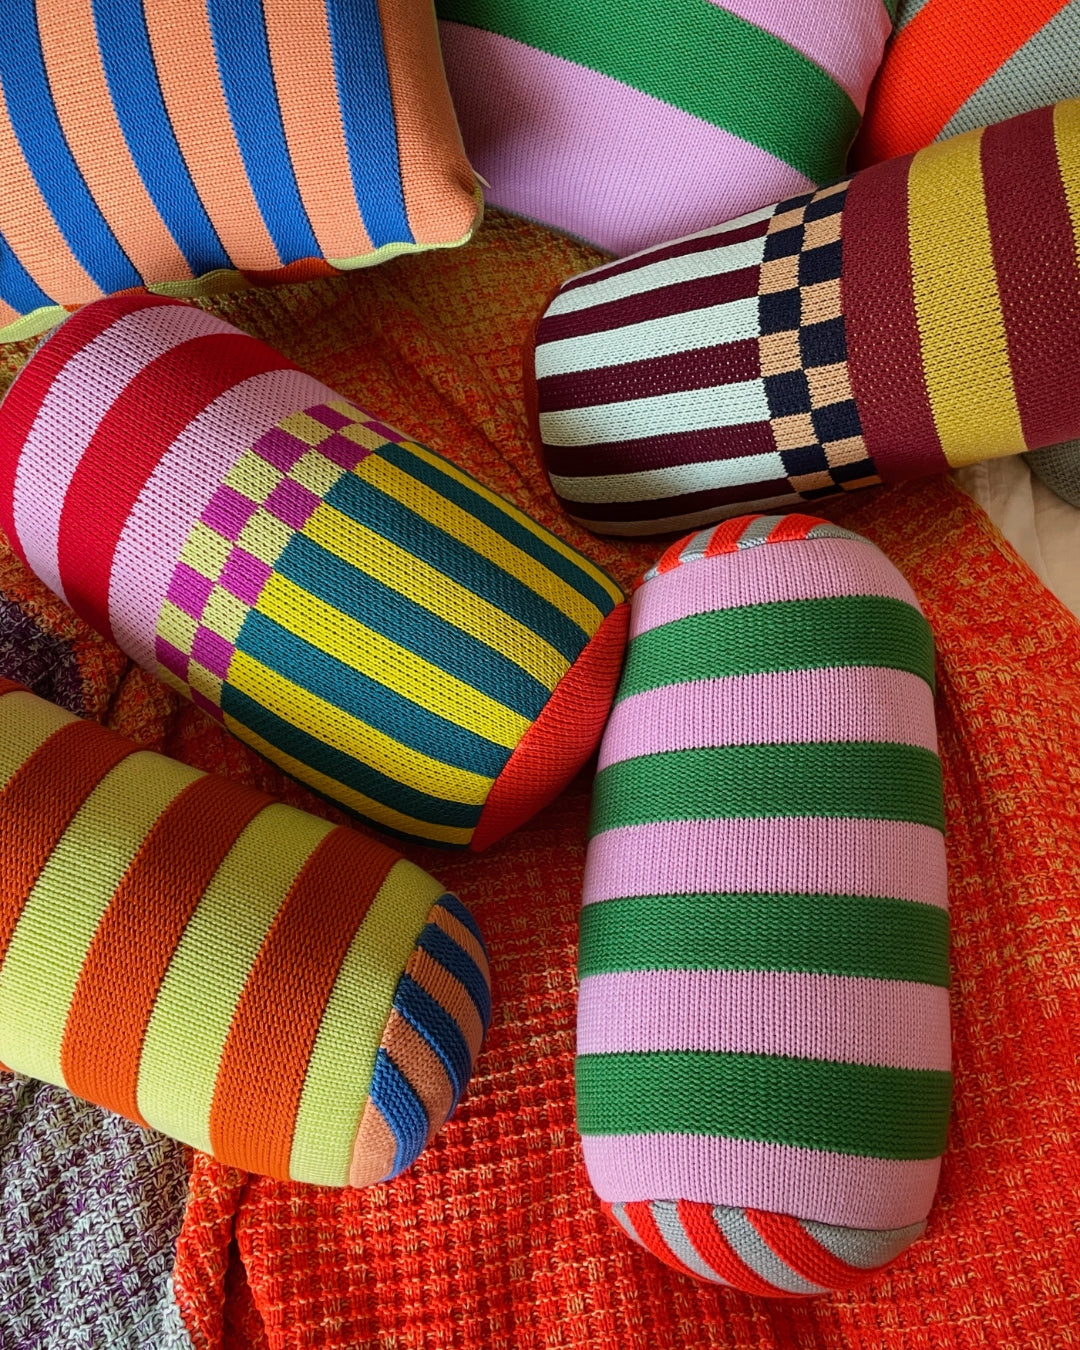 verloop colorful knit bolster pillows